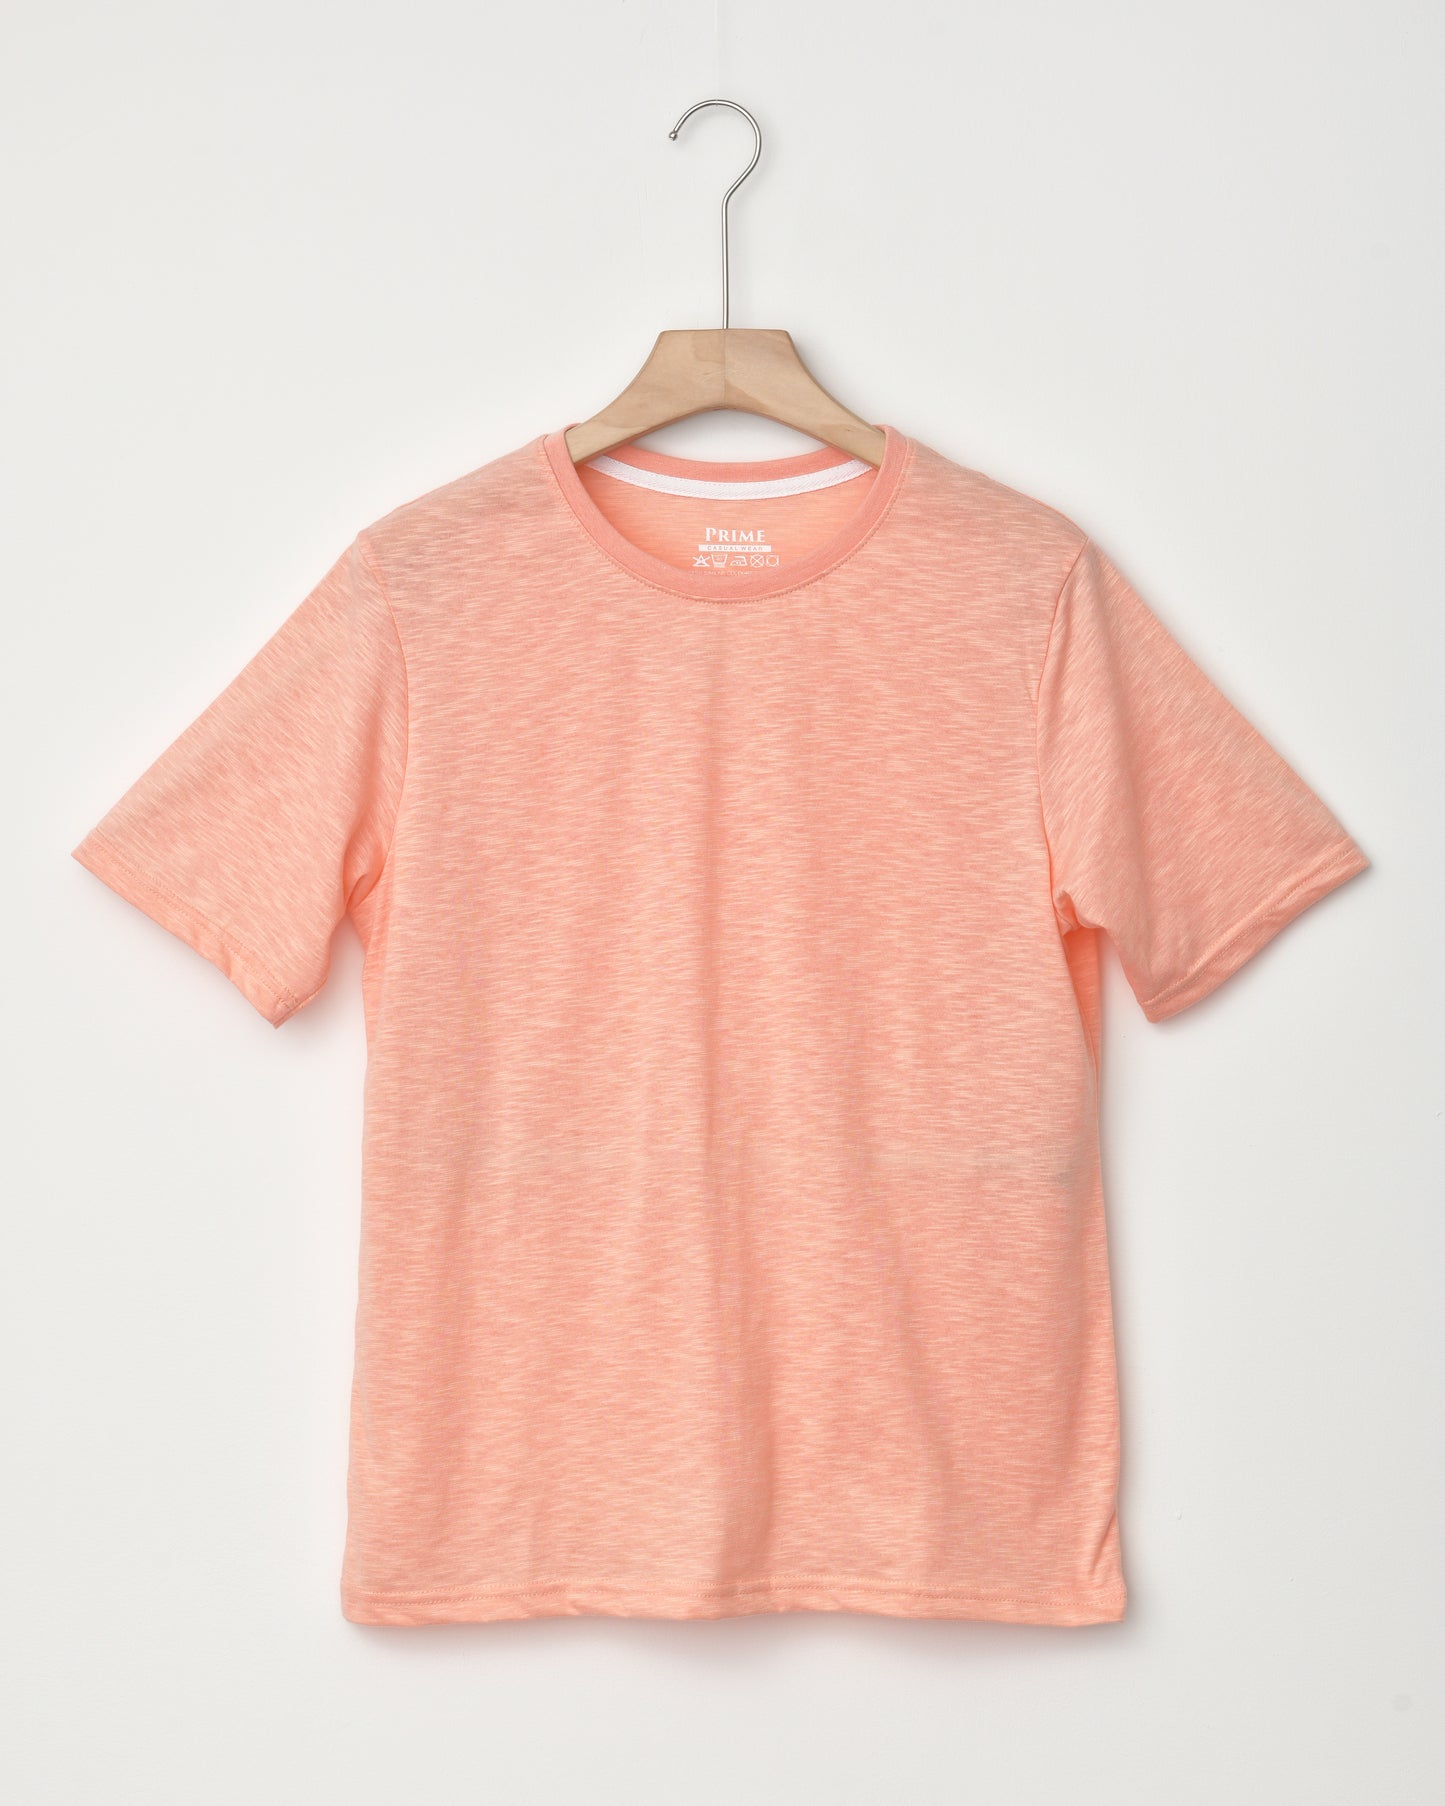 Dusty pink unisex t-shirt